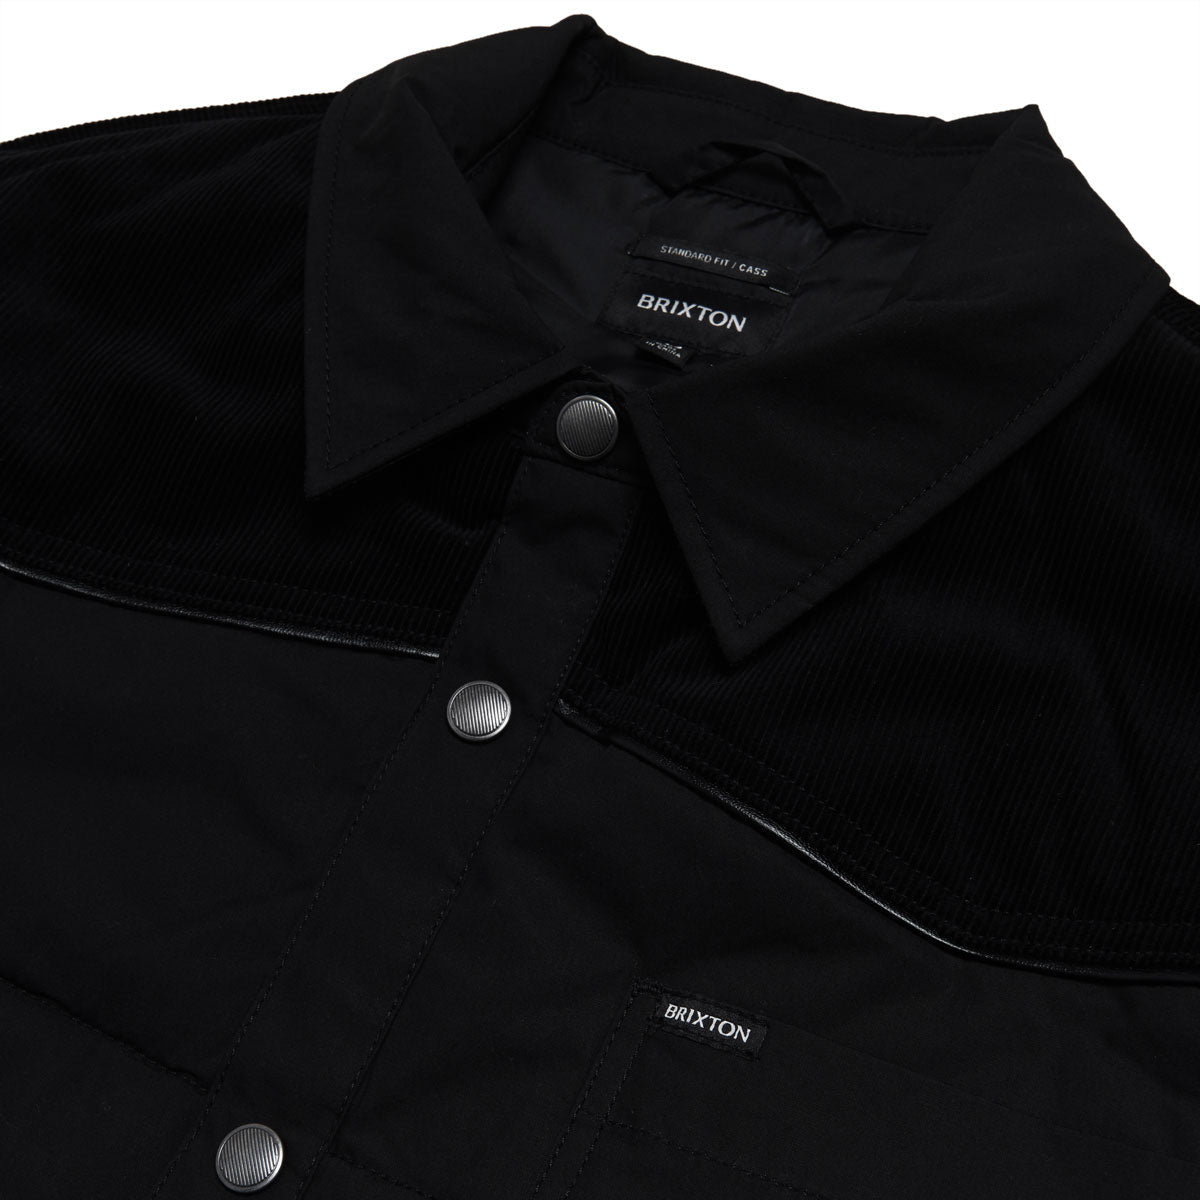 Brixton Cass Jacket - Black/Black Cord image 2